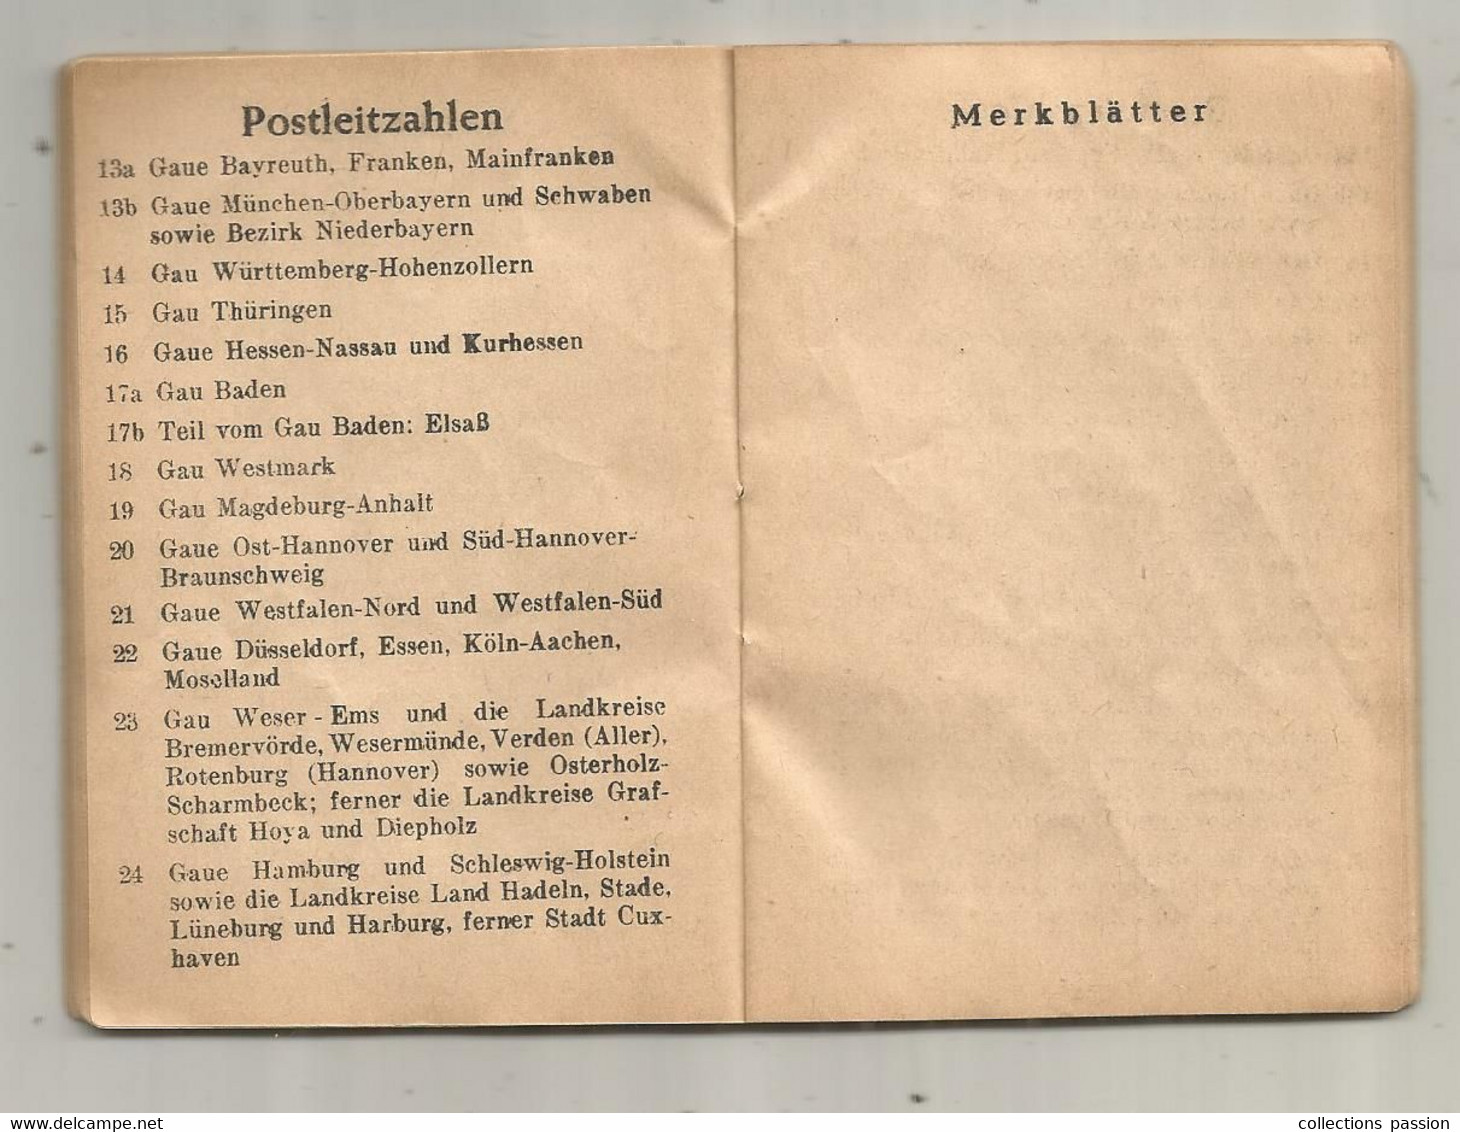 Calendrier , Agenda Merck Buch 1945 , KALENDER FÜR DAS JAHR 1945,  6 Scans , Petit Format,  Frais Fr 2.00 E - Tamaño Pequeño : 1941-60